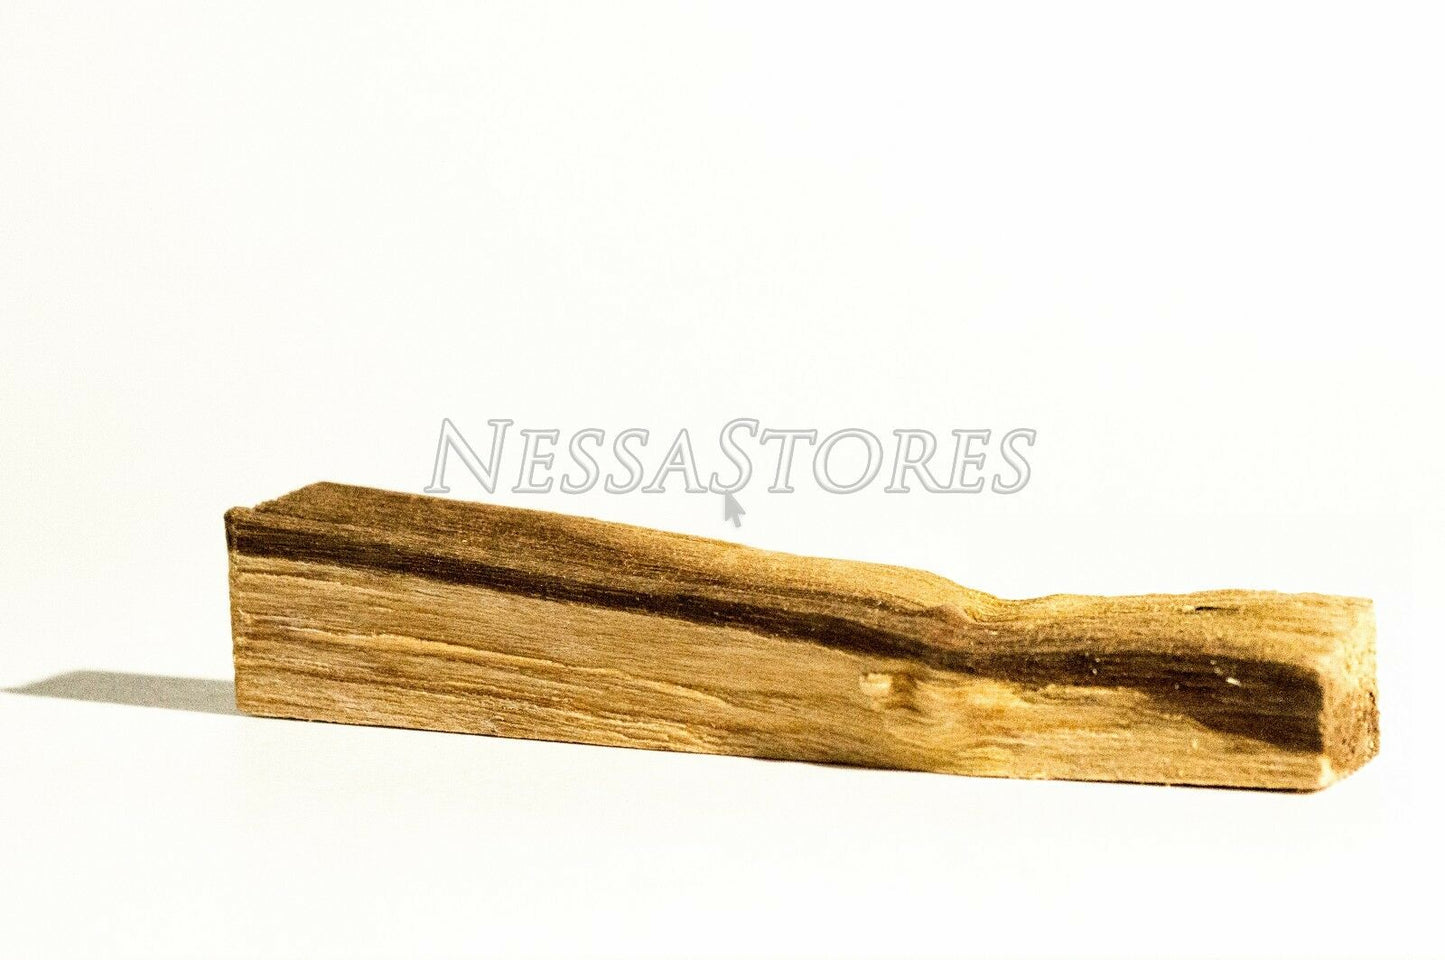 NessaStores Palo Santo Holy Wood Incense Sticks Peruvian ( 15 pcs) #JC-65